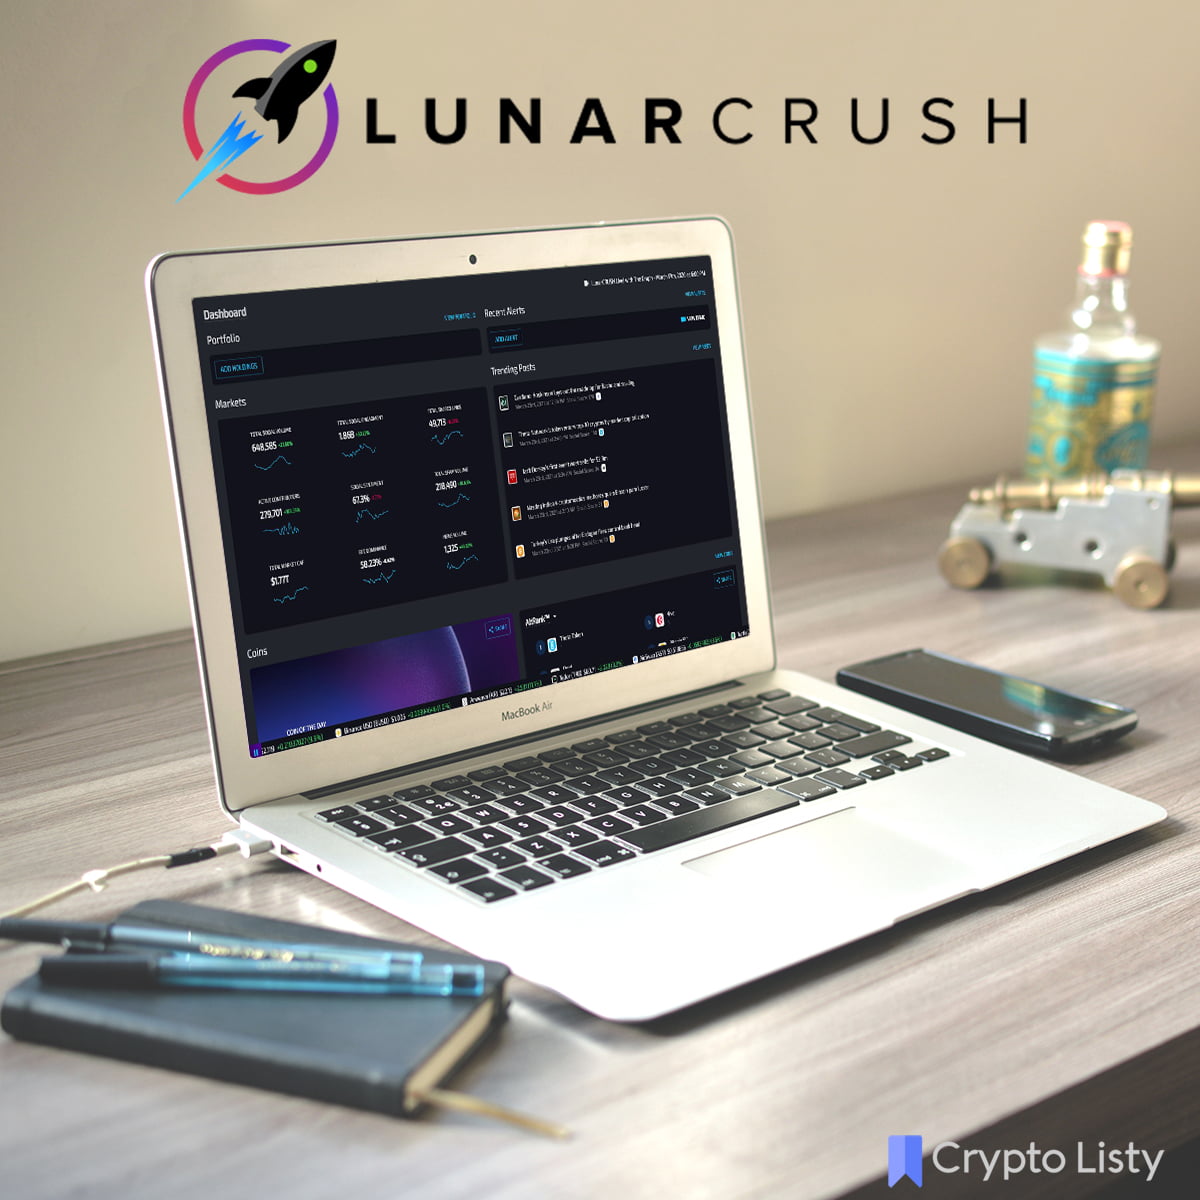 LunarCrush website.